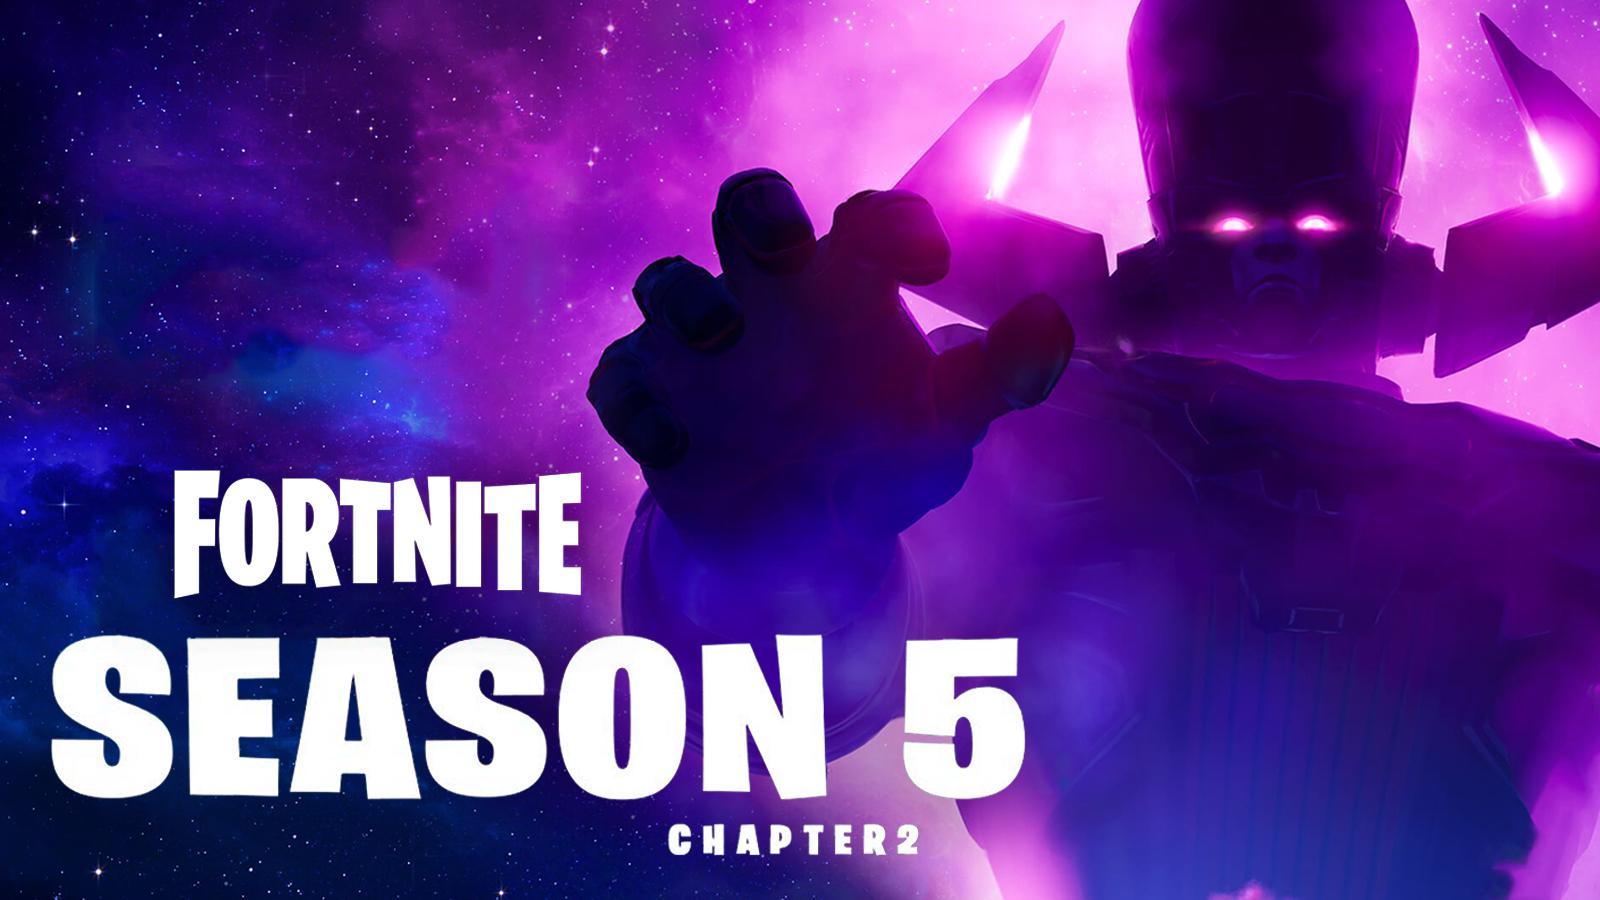 Galactus looms over a Fortnite Chapter 2 Season 5 logo.